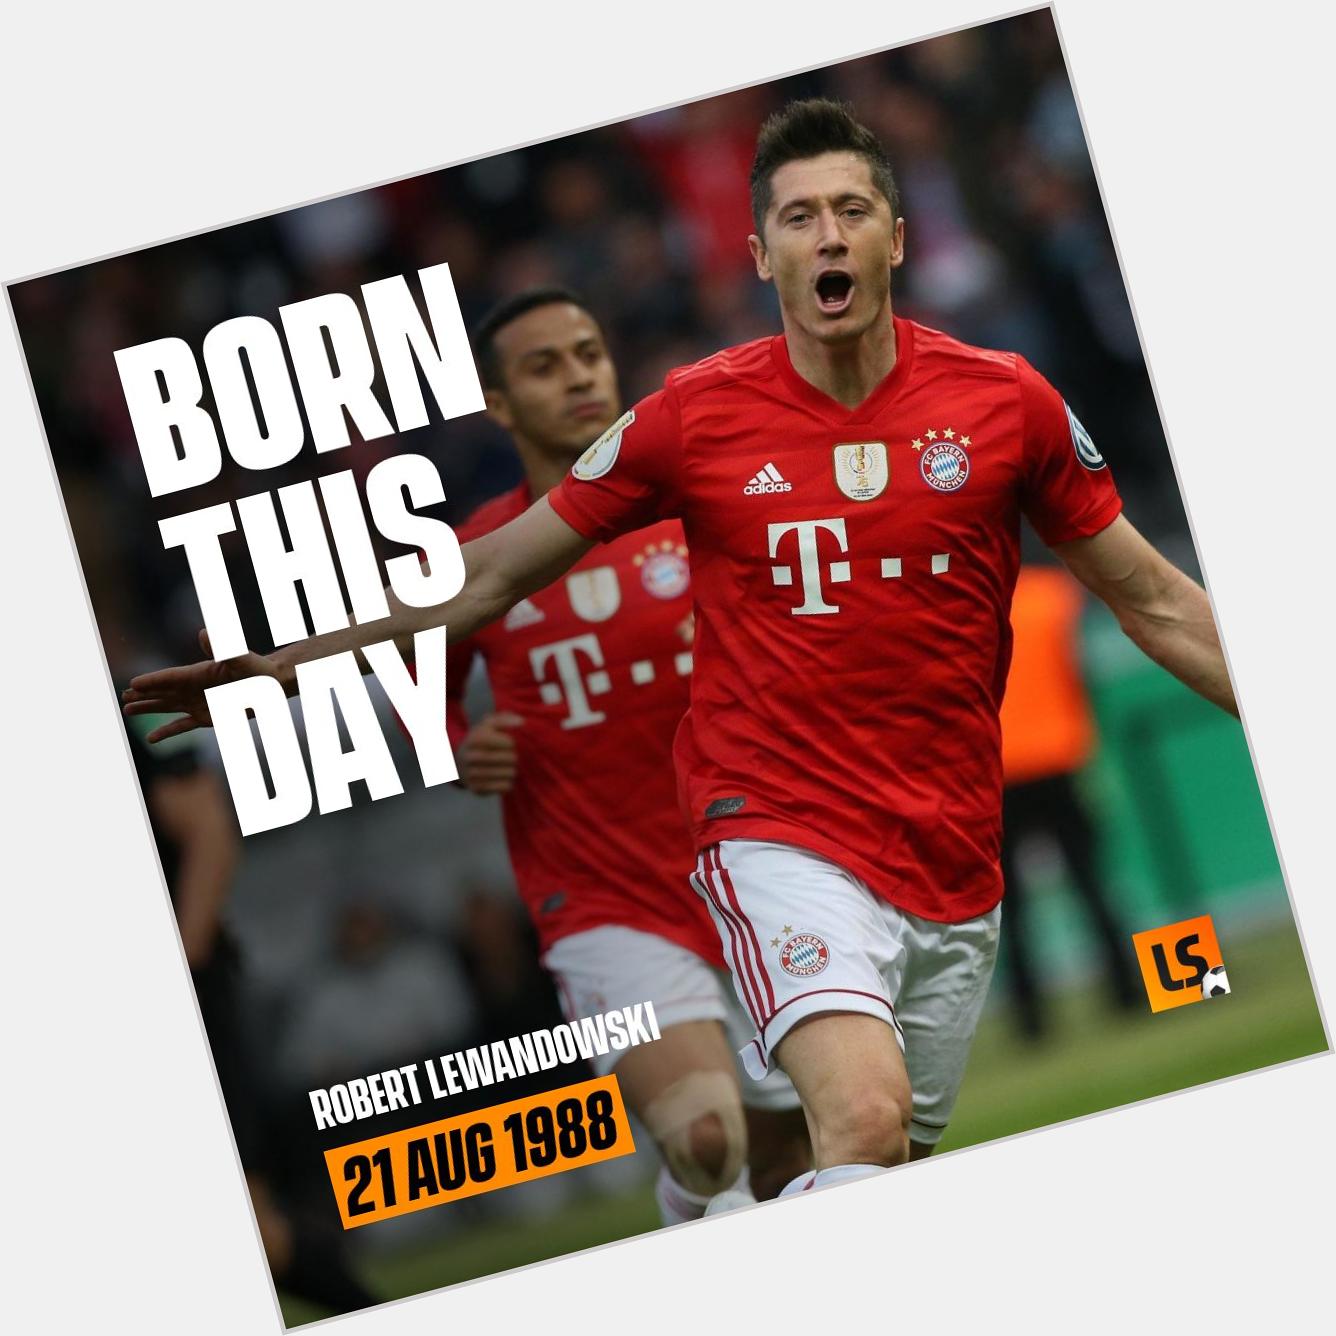 546 games 416 goals  7 Bundesliga titles   Happy Birthday Robert Lewandowski  